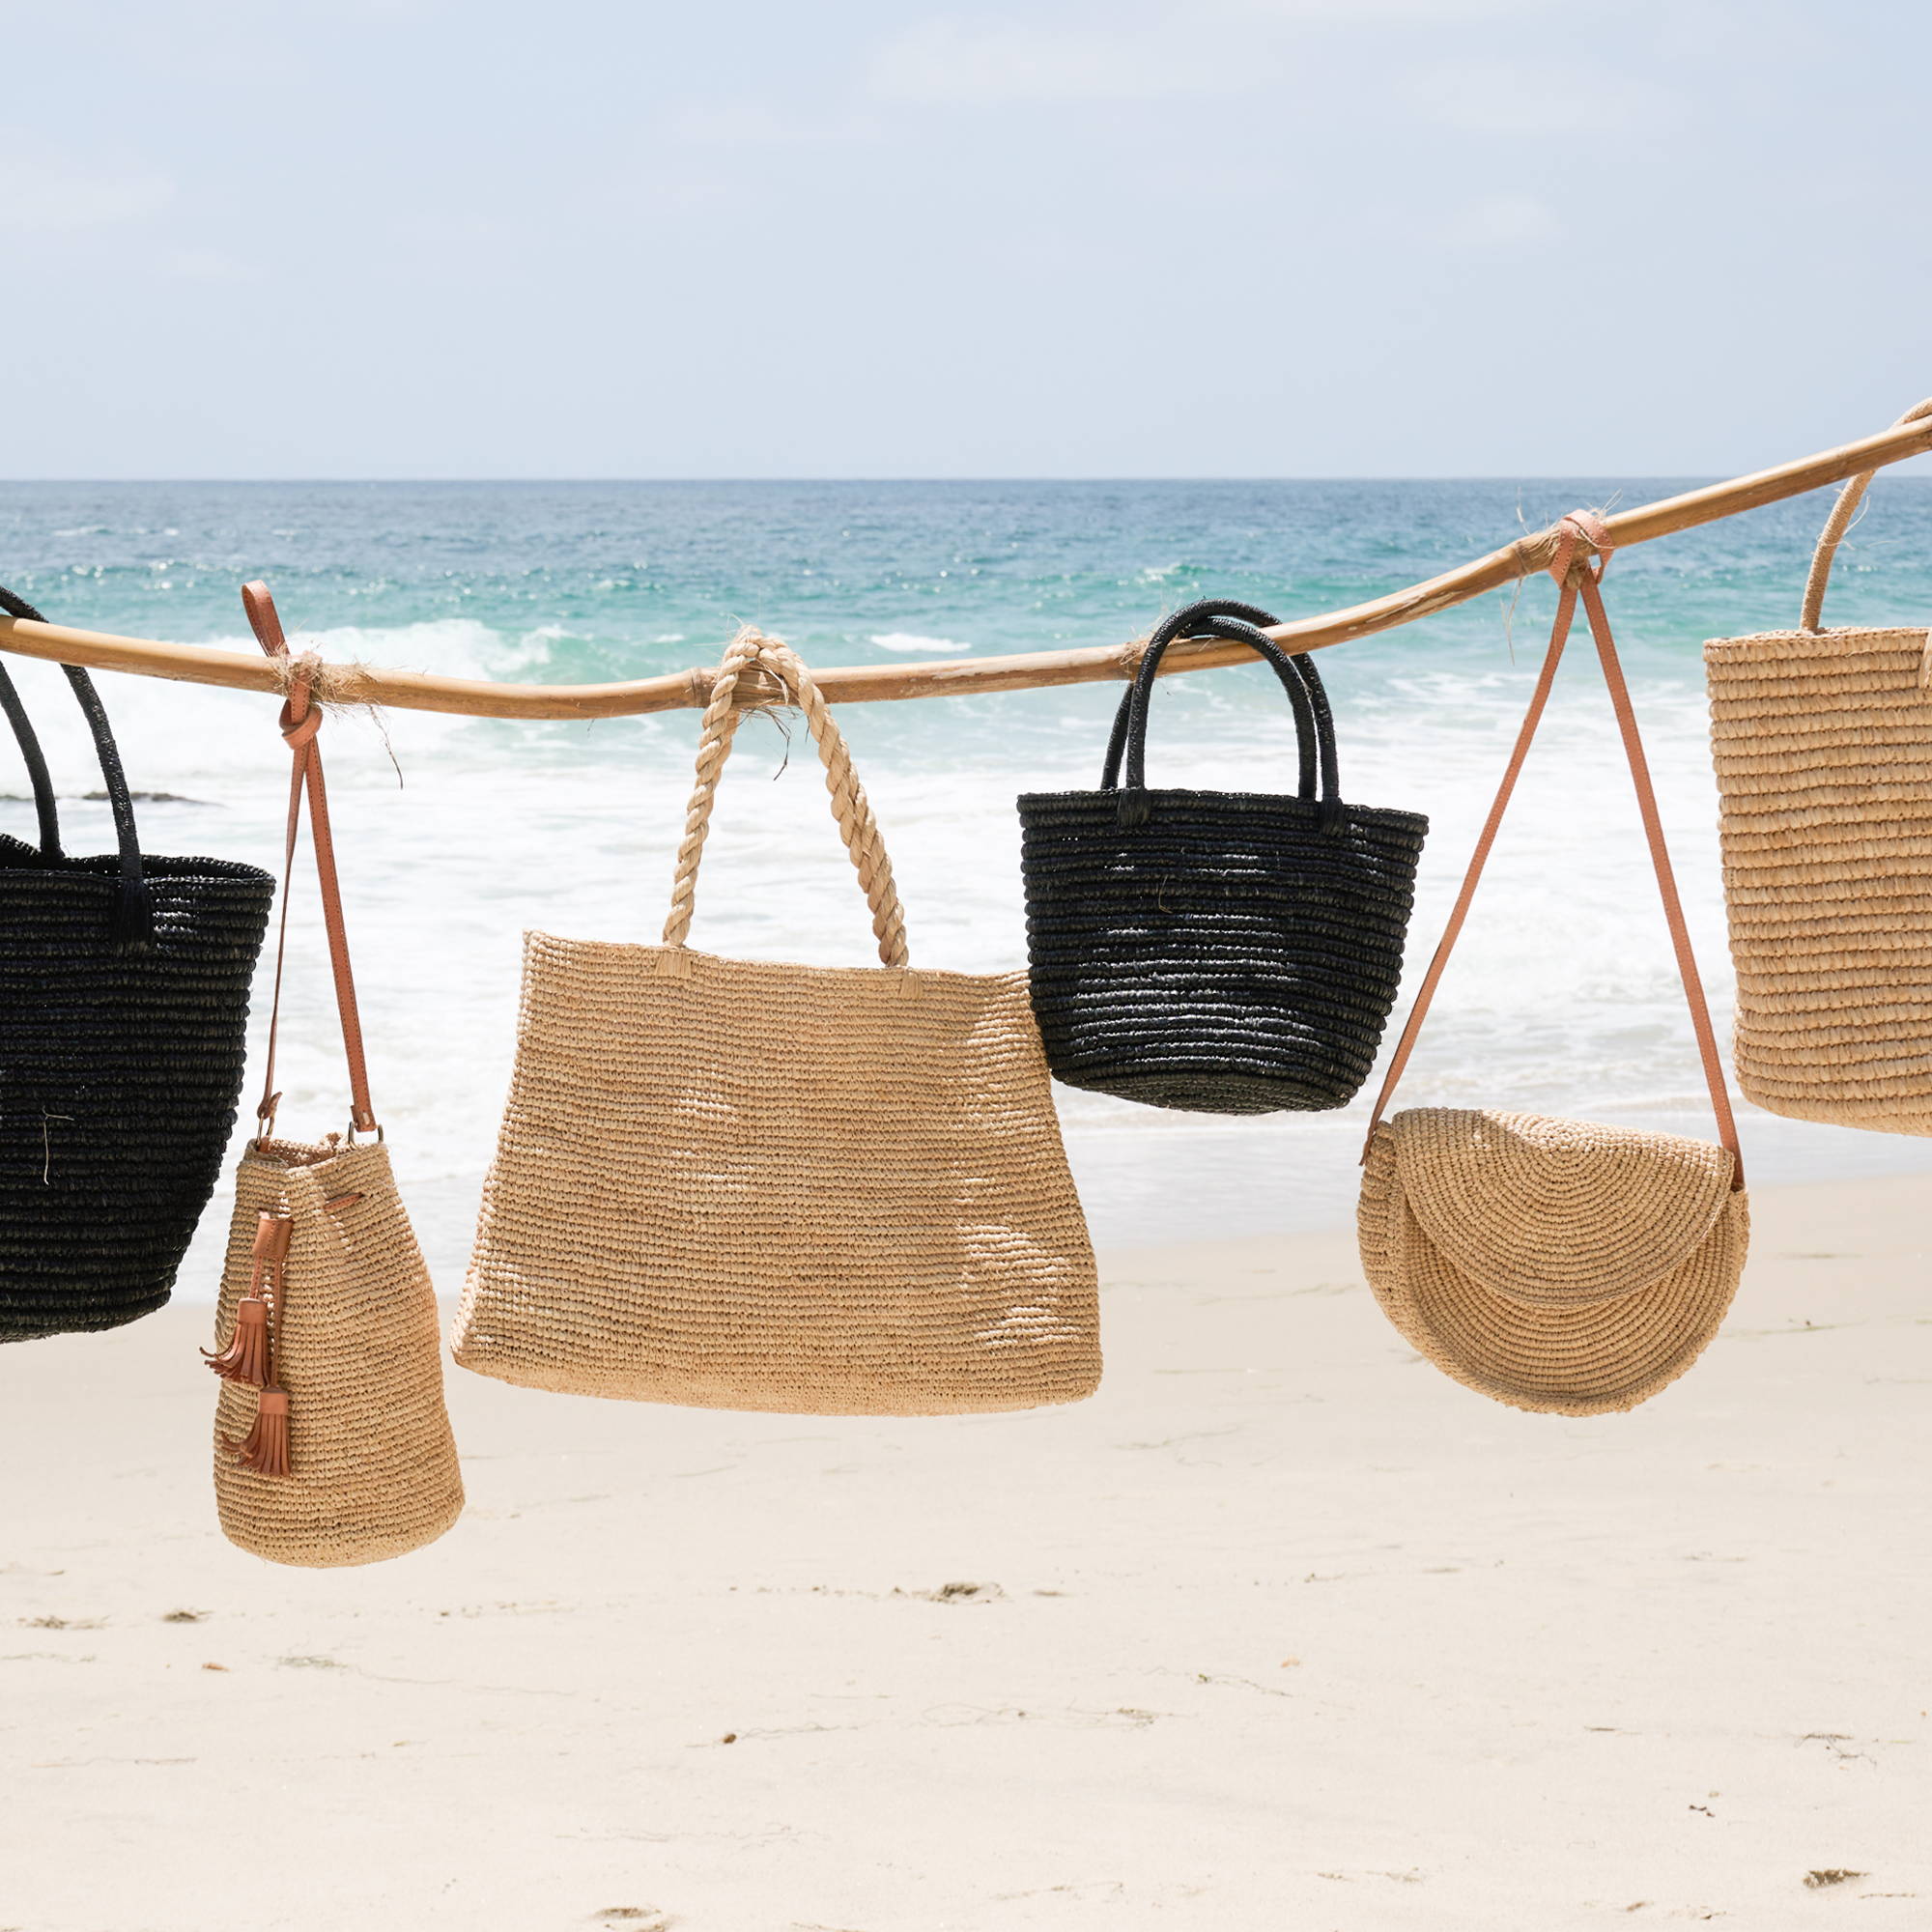 Raffia Handbags for Summer | The Little Market